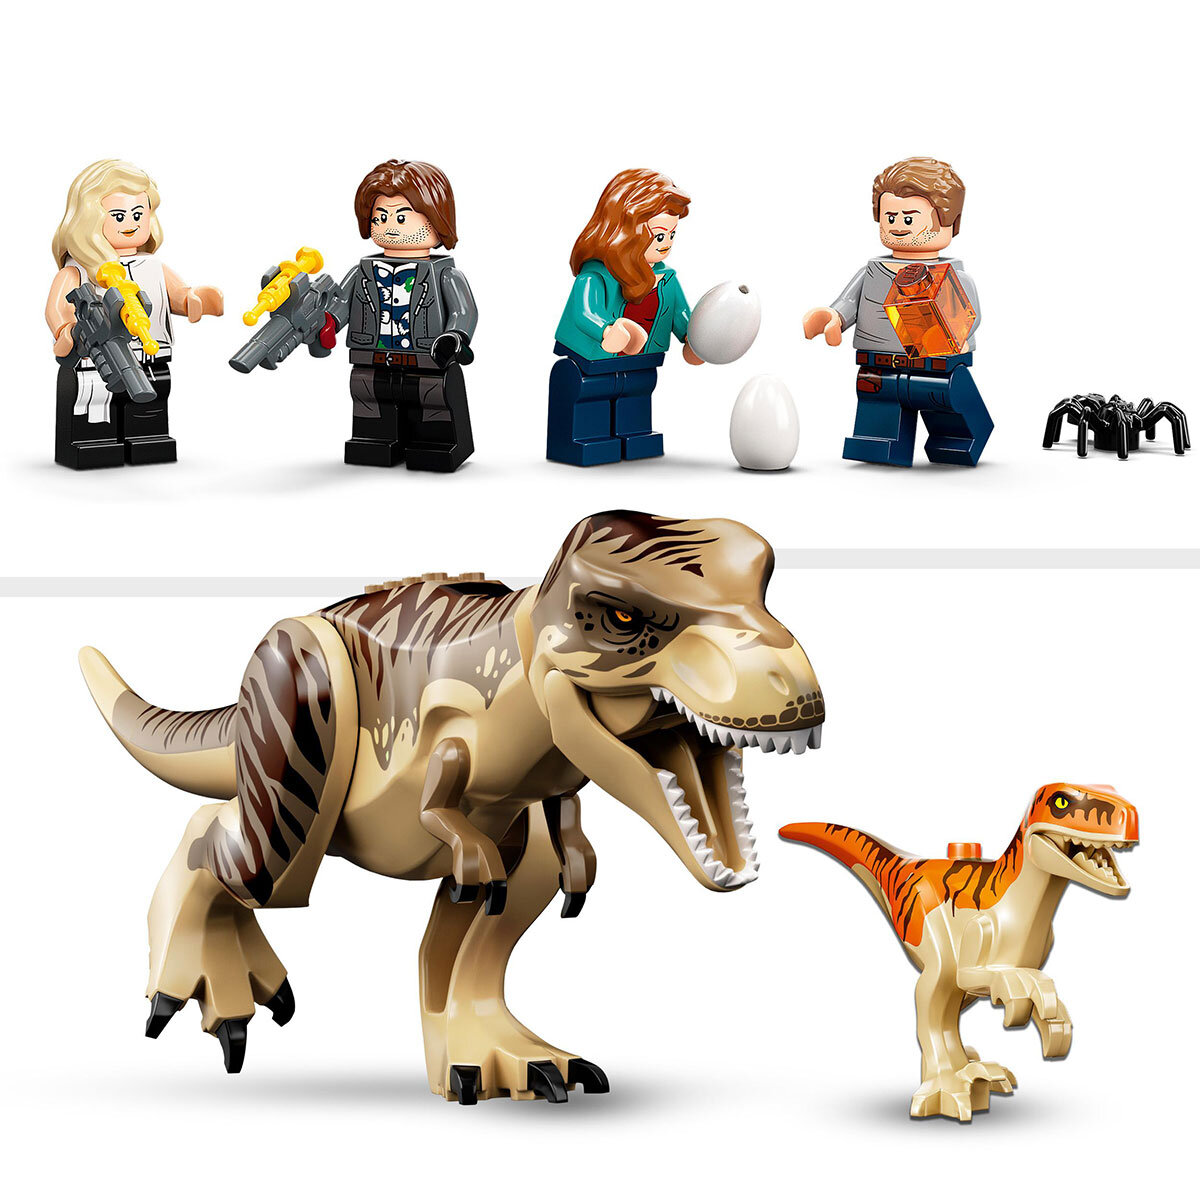 Buy LEGO Jurassic World Dinosaur Breakout Included Image at Costco.co.uk